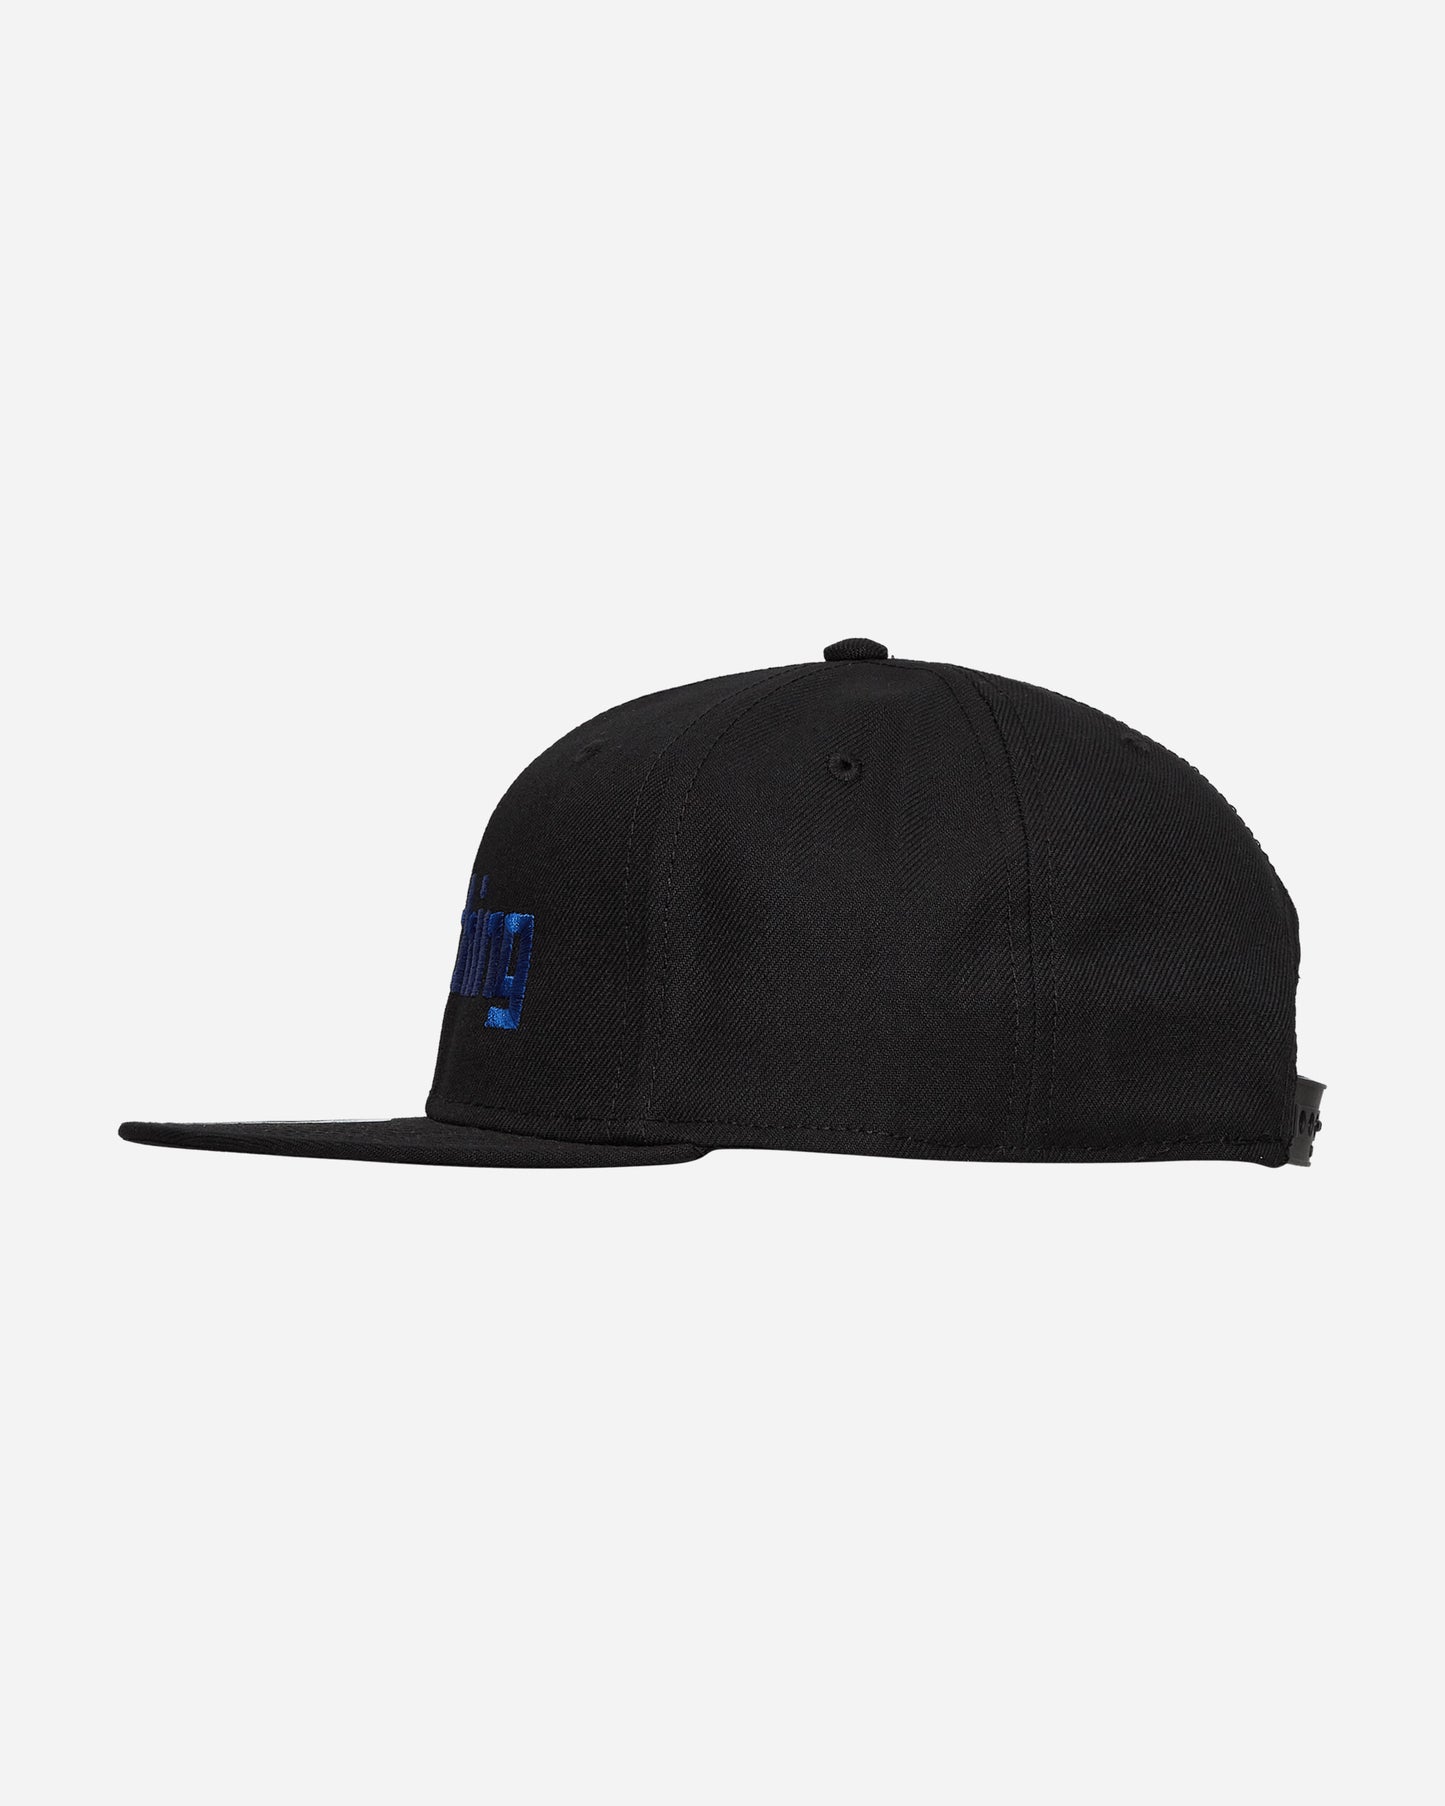 aNYthing Speedball Logo Flat Brim Black Hats Caps ANY-100 BK